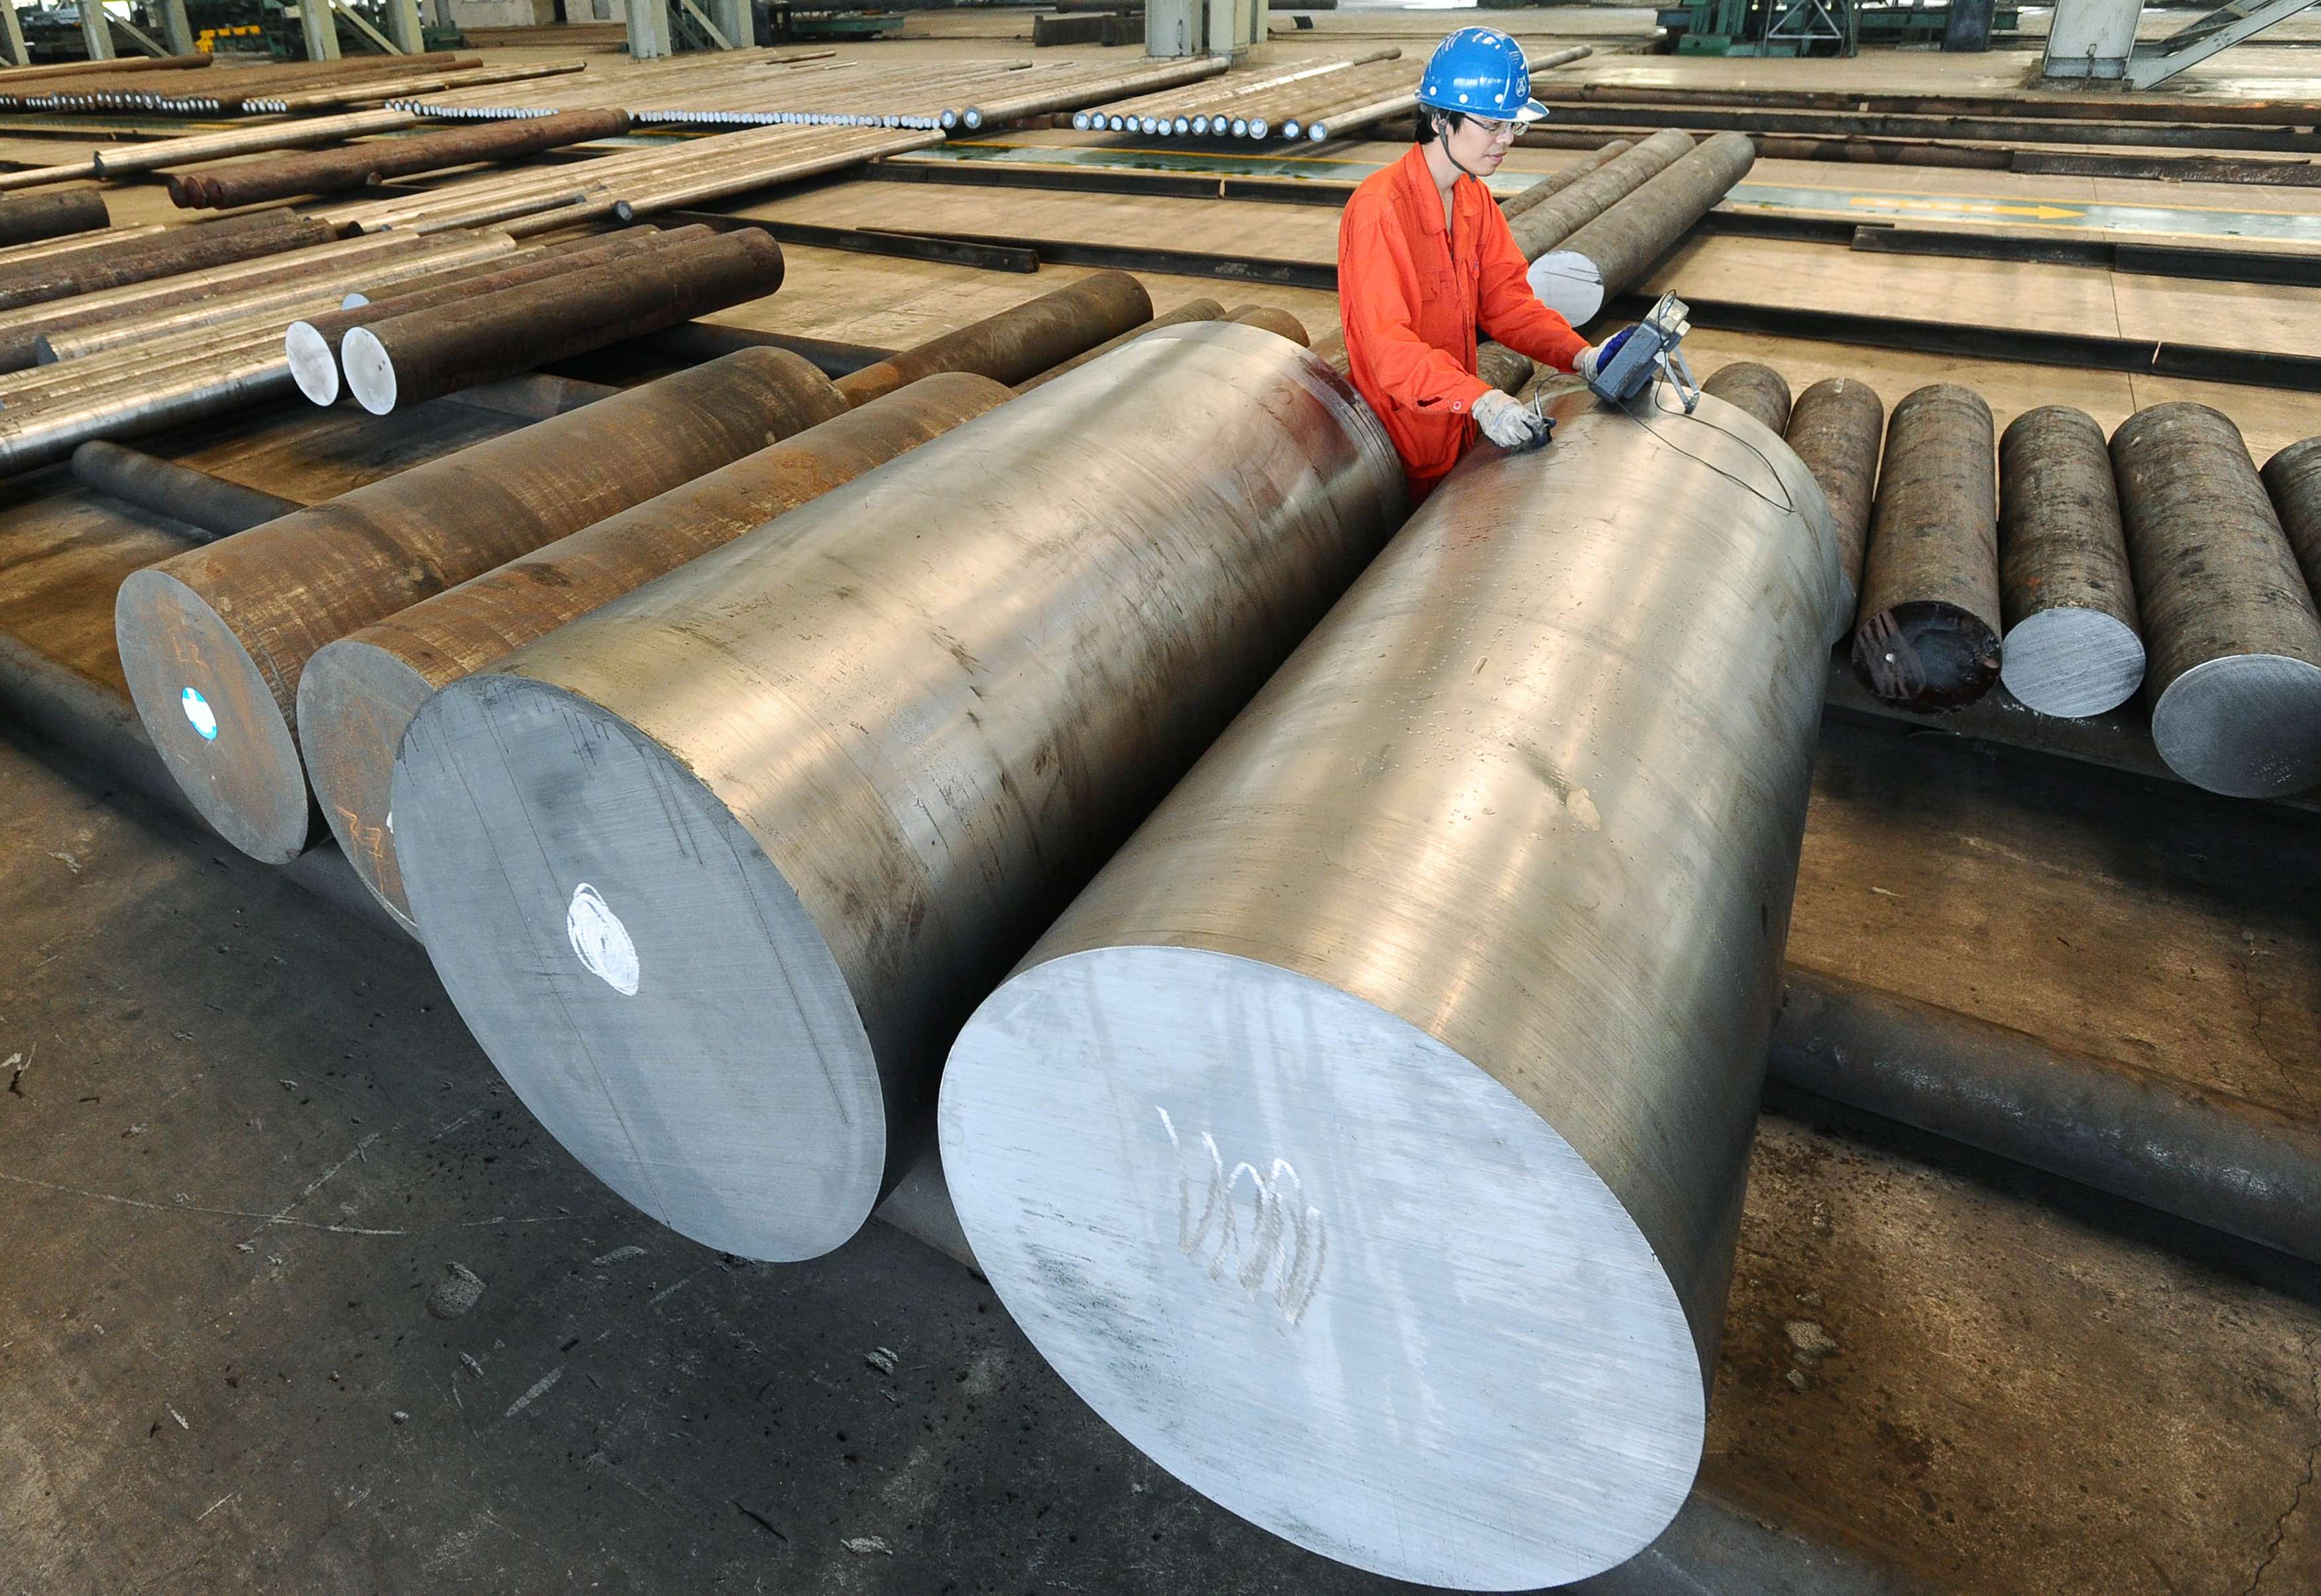 The EU says China has made no progress on addressing steel overcapacity. Photo: Reuters